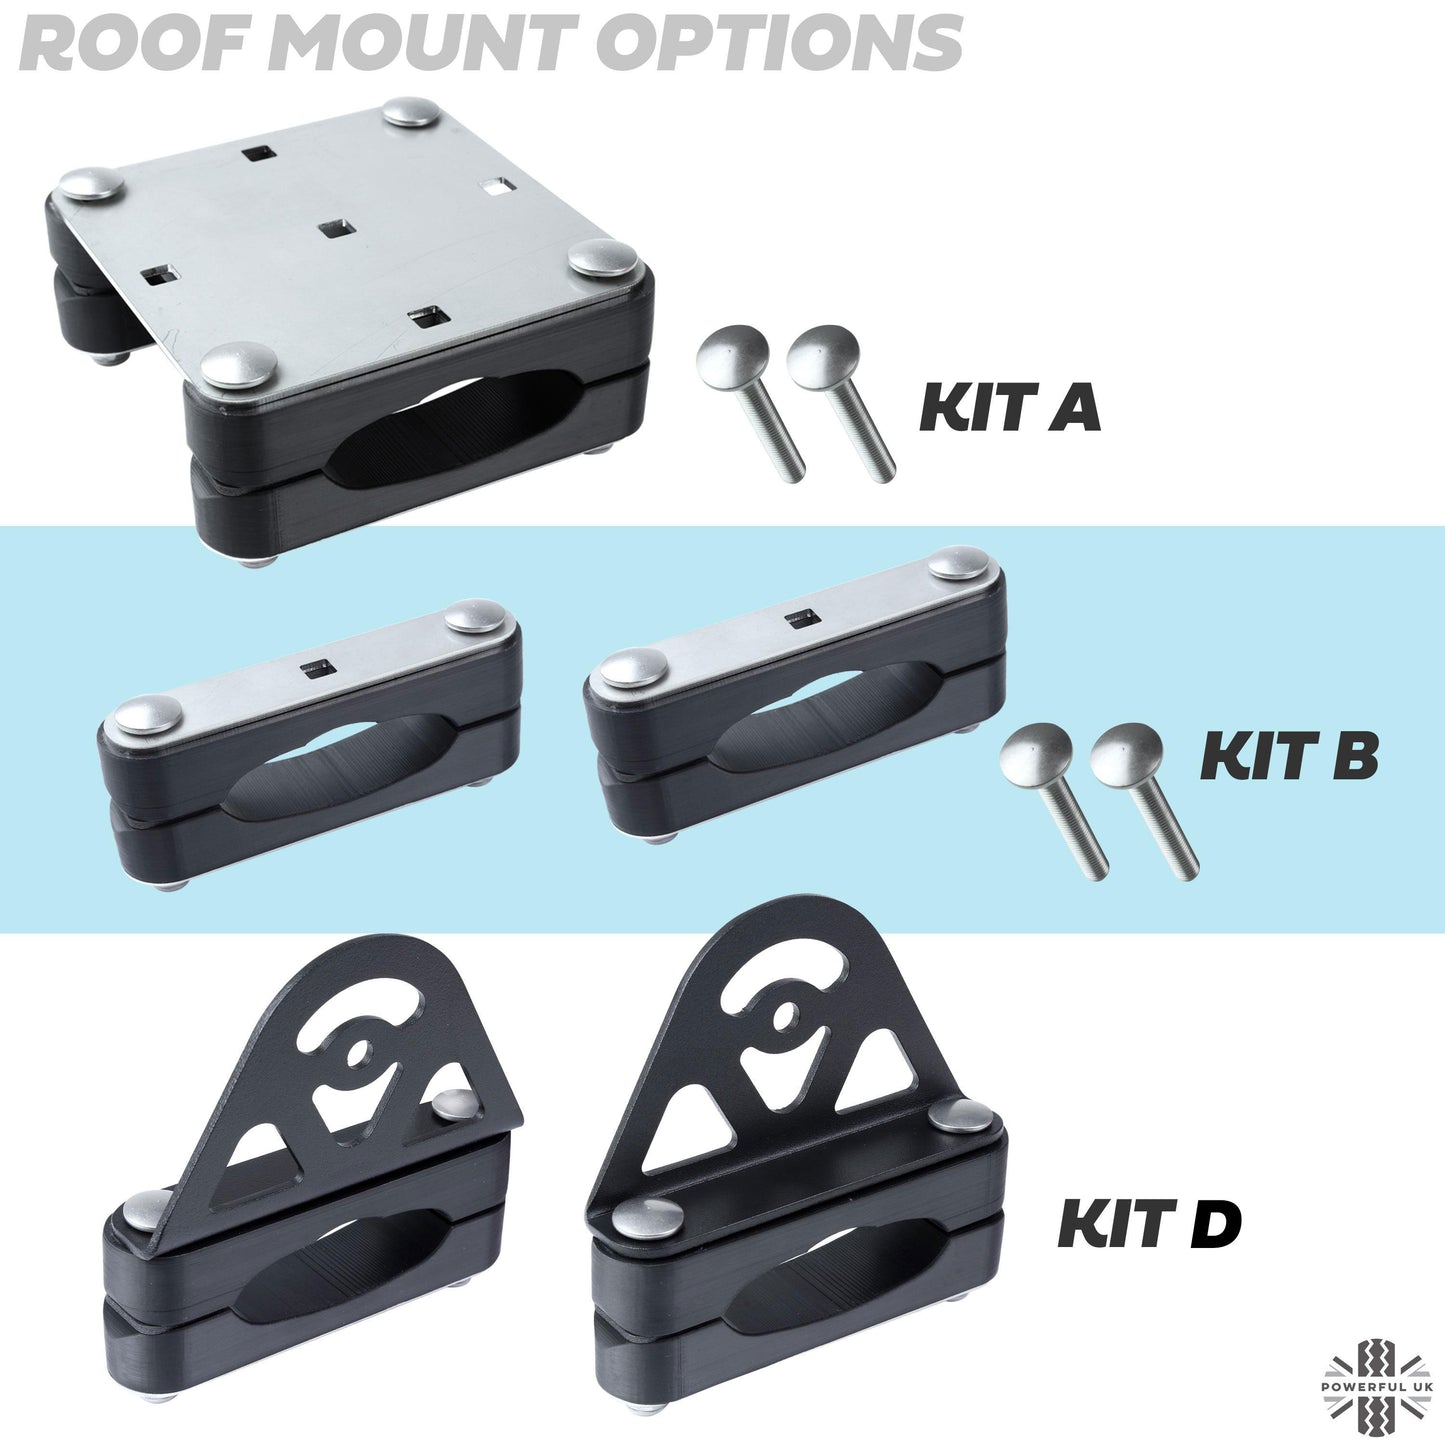 Roof Cross Bar Mount Clamp Kit for VW Transporter T5 & T6 Van - Kit A - Stainless Steel Top